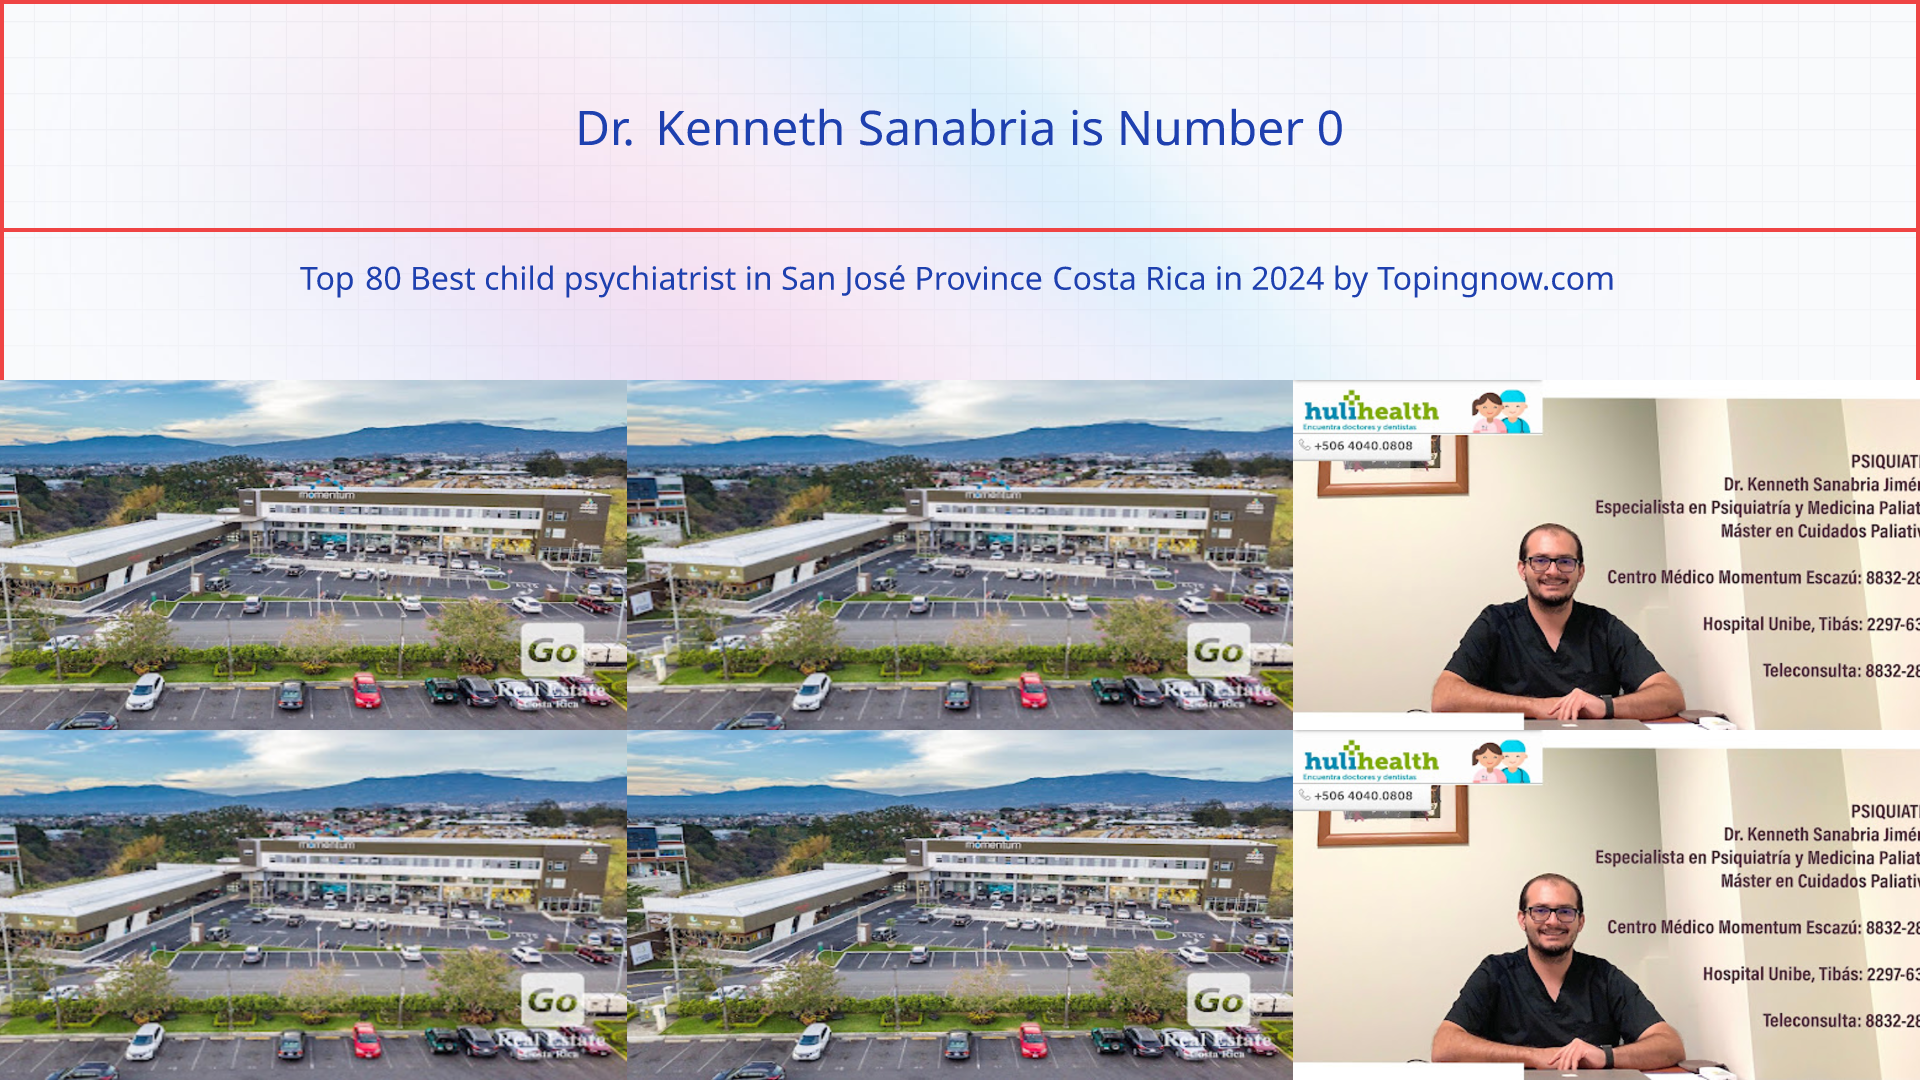 Dr. Kenneth Sanabria: Top 80 Best child psychiatrist in San José Province Costa Rica in 2024